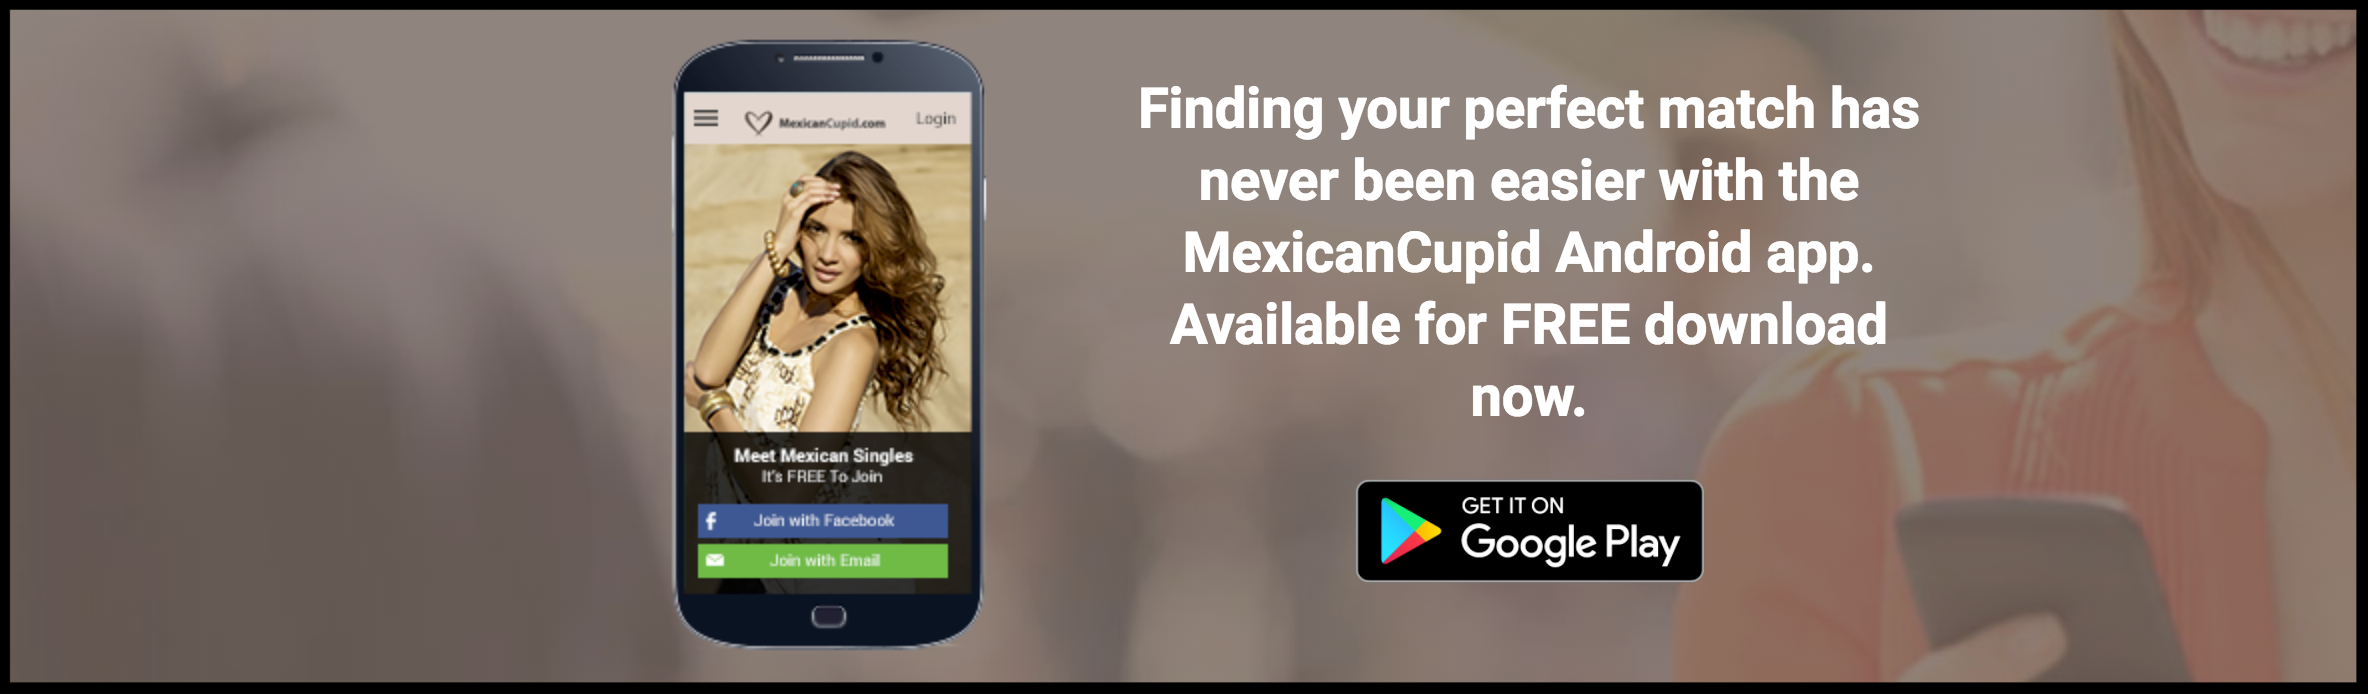 Meet Mexican Singles